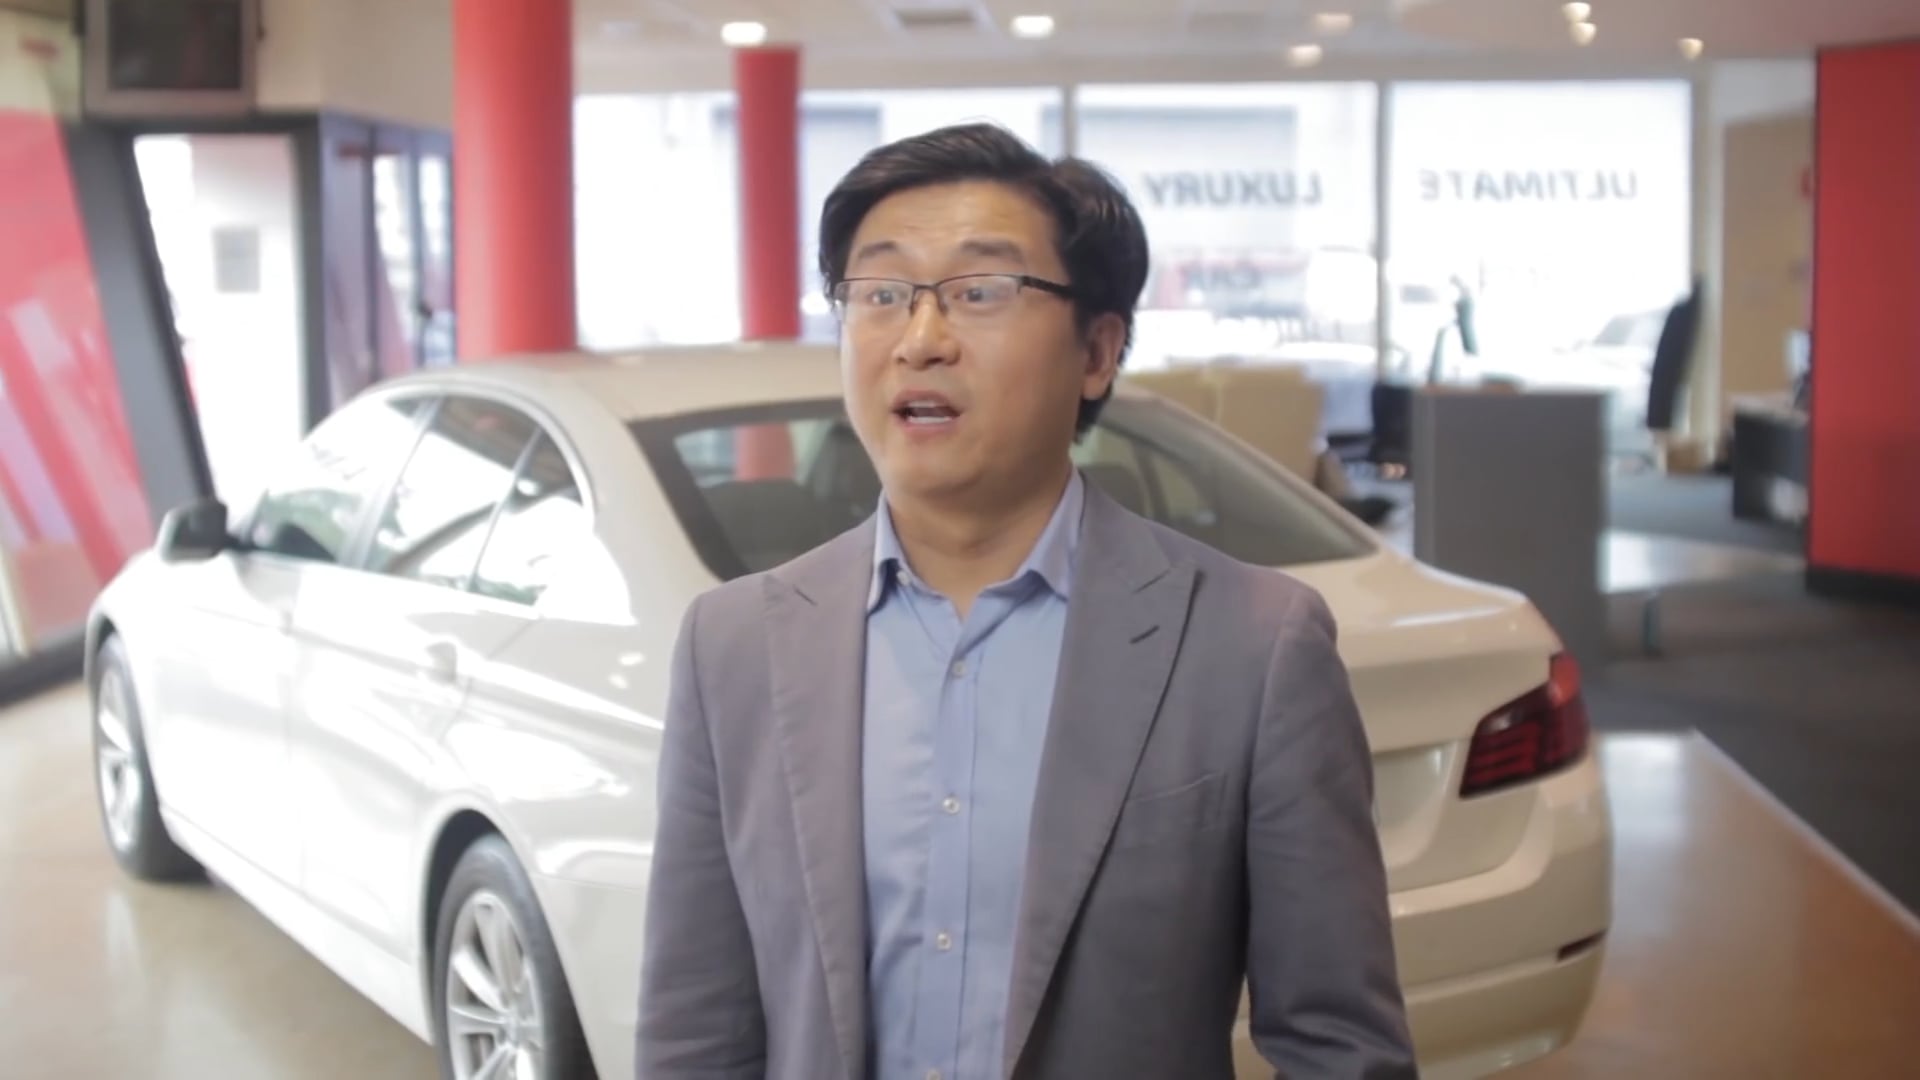 Superwog - Car Dealership 1 on Vimeo